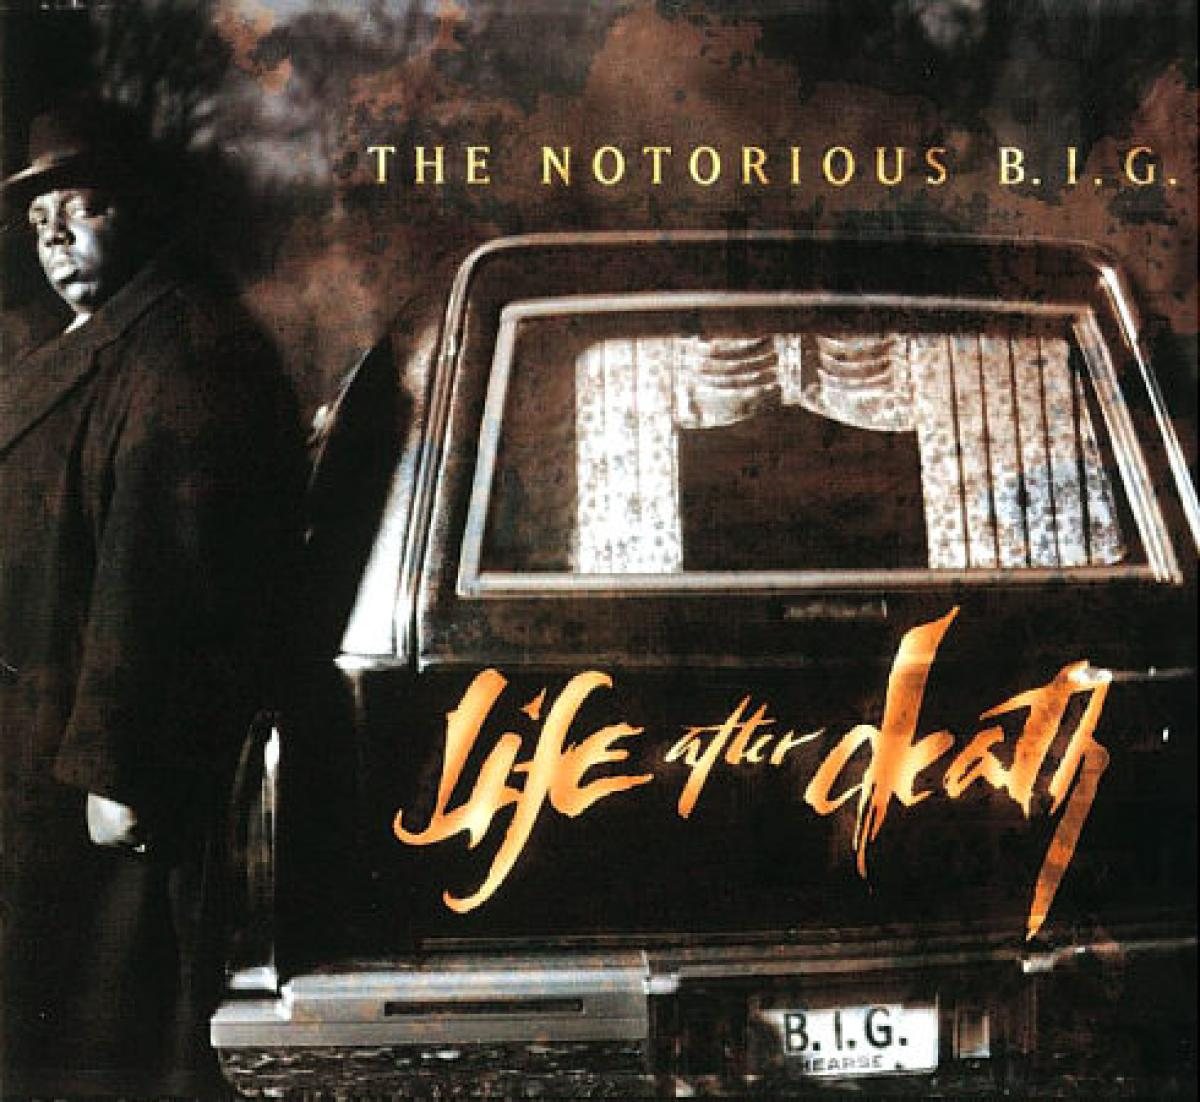 Rapper Notorious B.I.G. é morto a tiros nos Estados Unidos